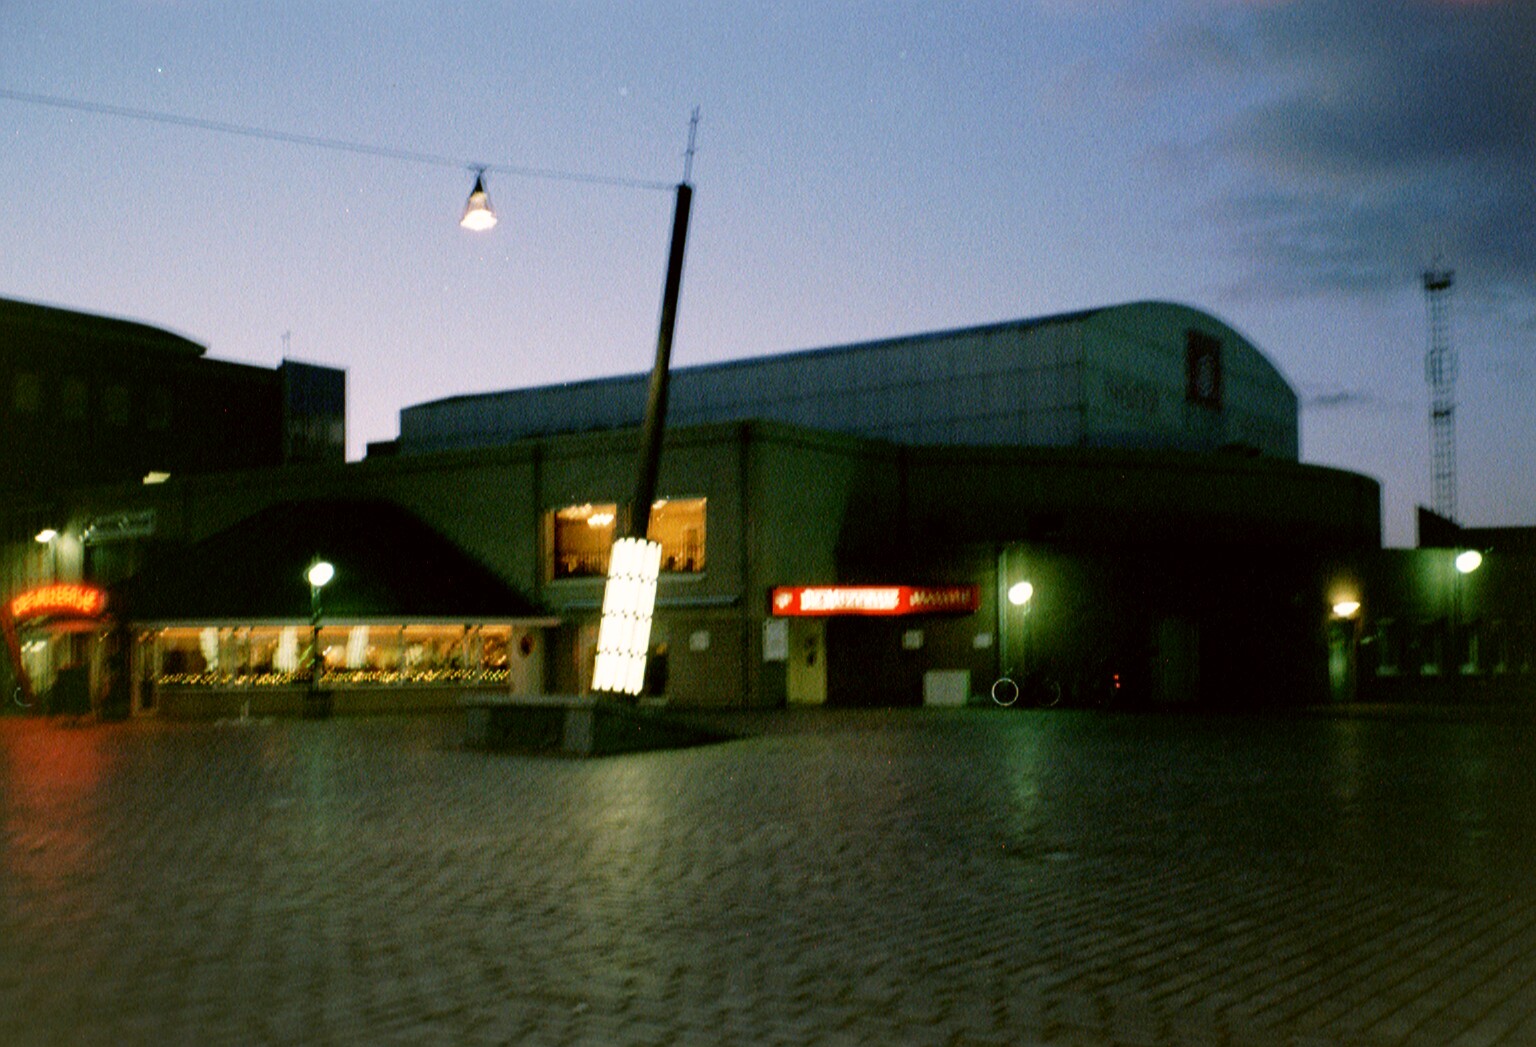 Theater de Schalm